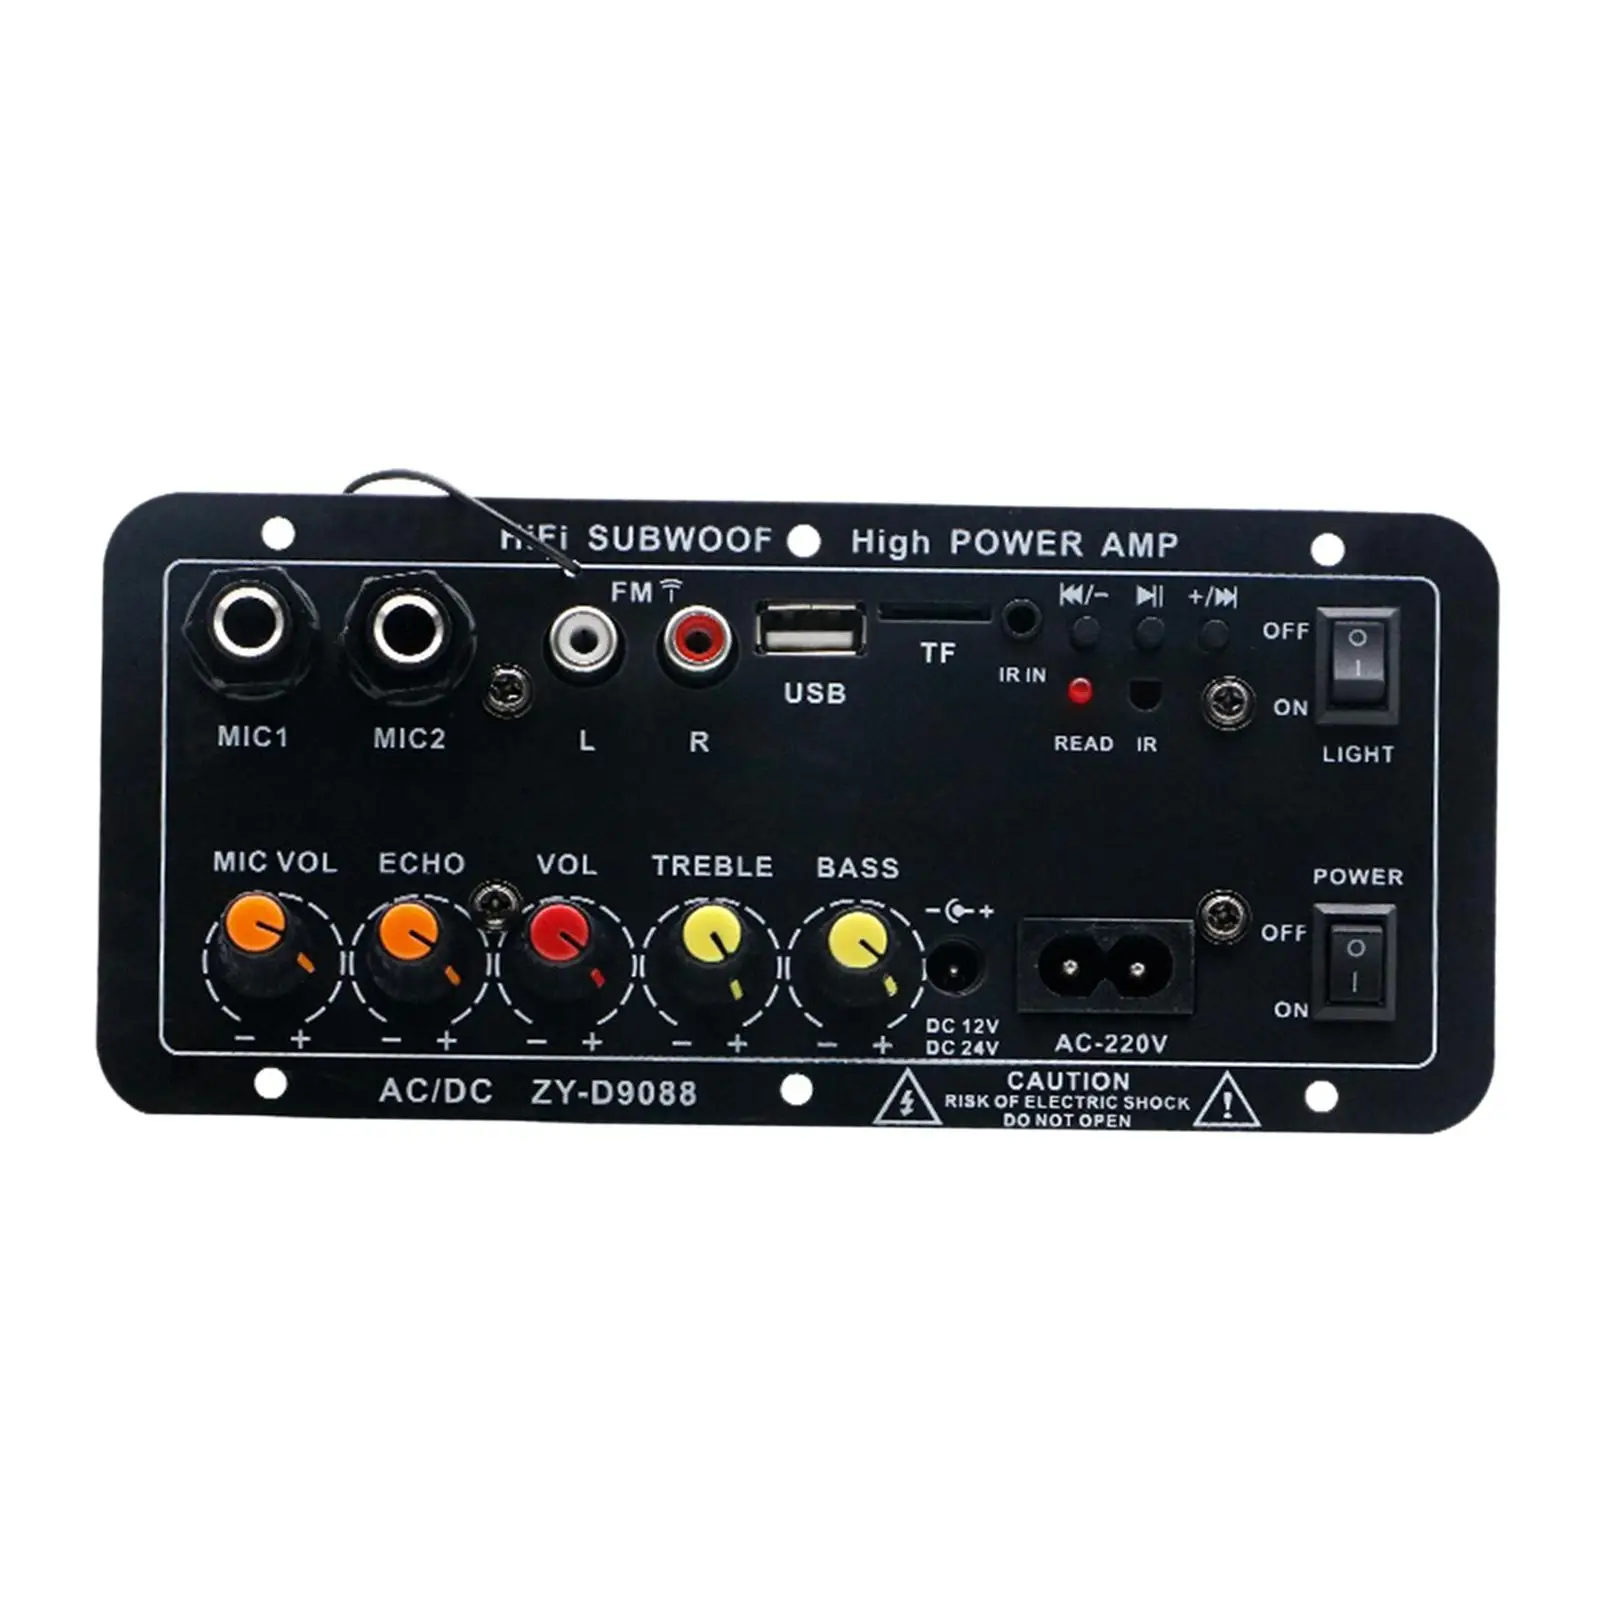 Amplifier Board USB TF Card HiFi Mini 220V 12V 24V Stereo Audio Module for Store Theater Speakers Car Home Speakers EU